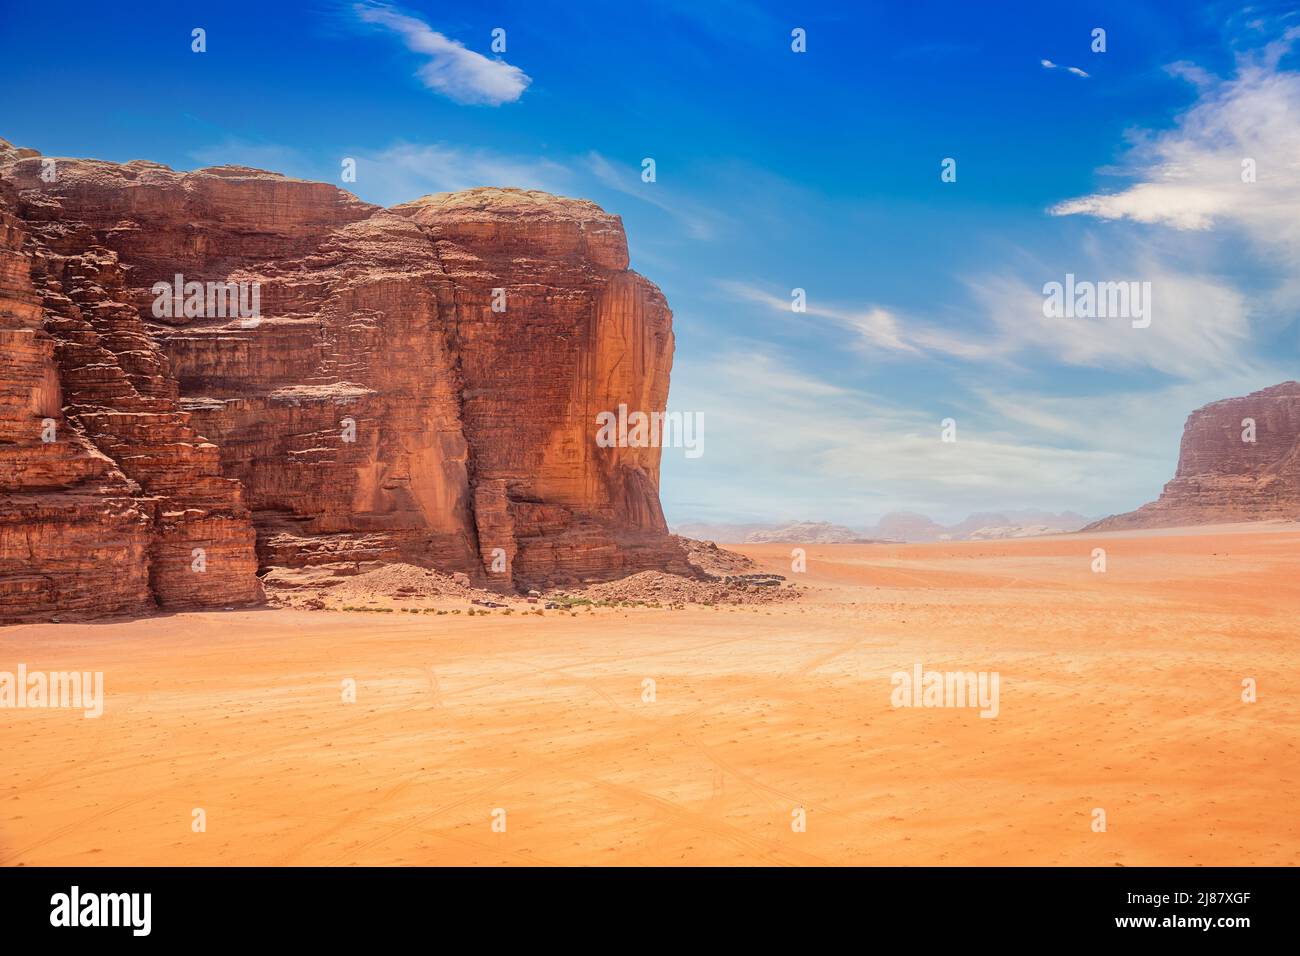 Red sands and mountains of Wadi Rum desert, Jordan Stock Photo